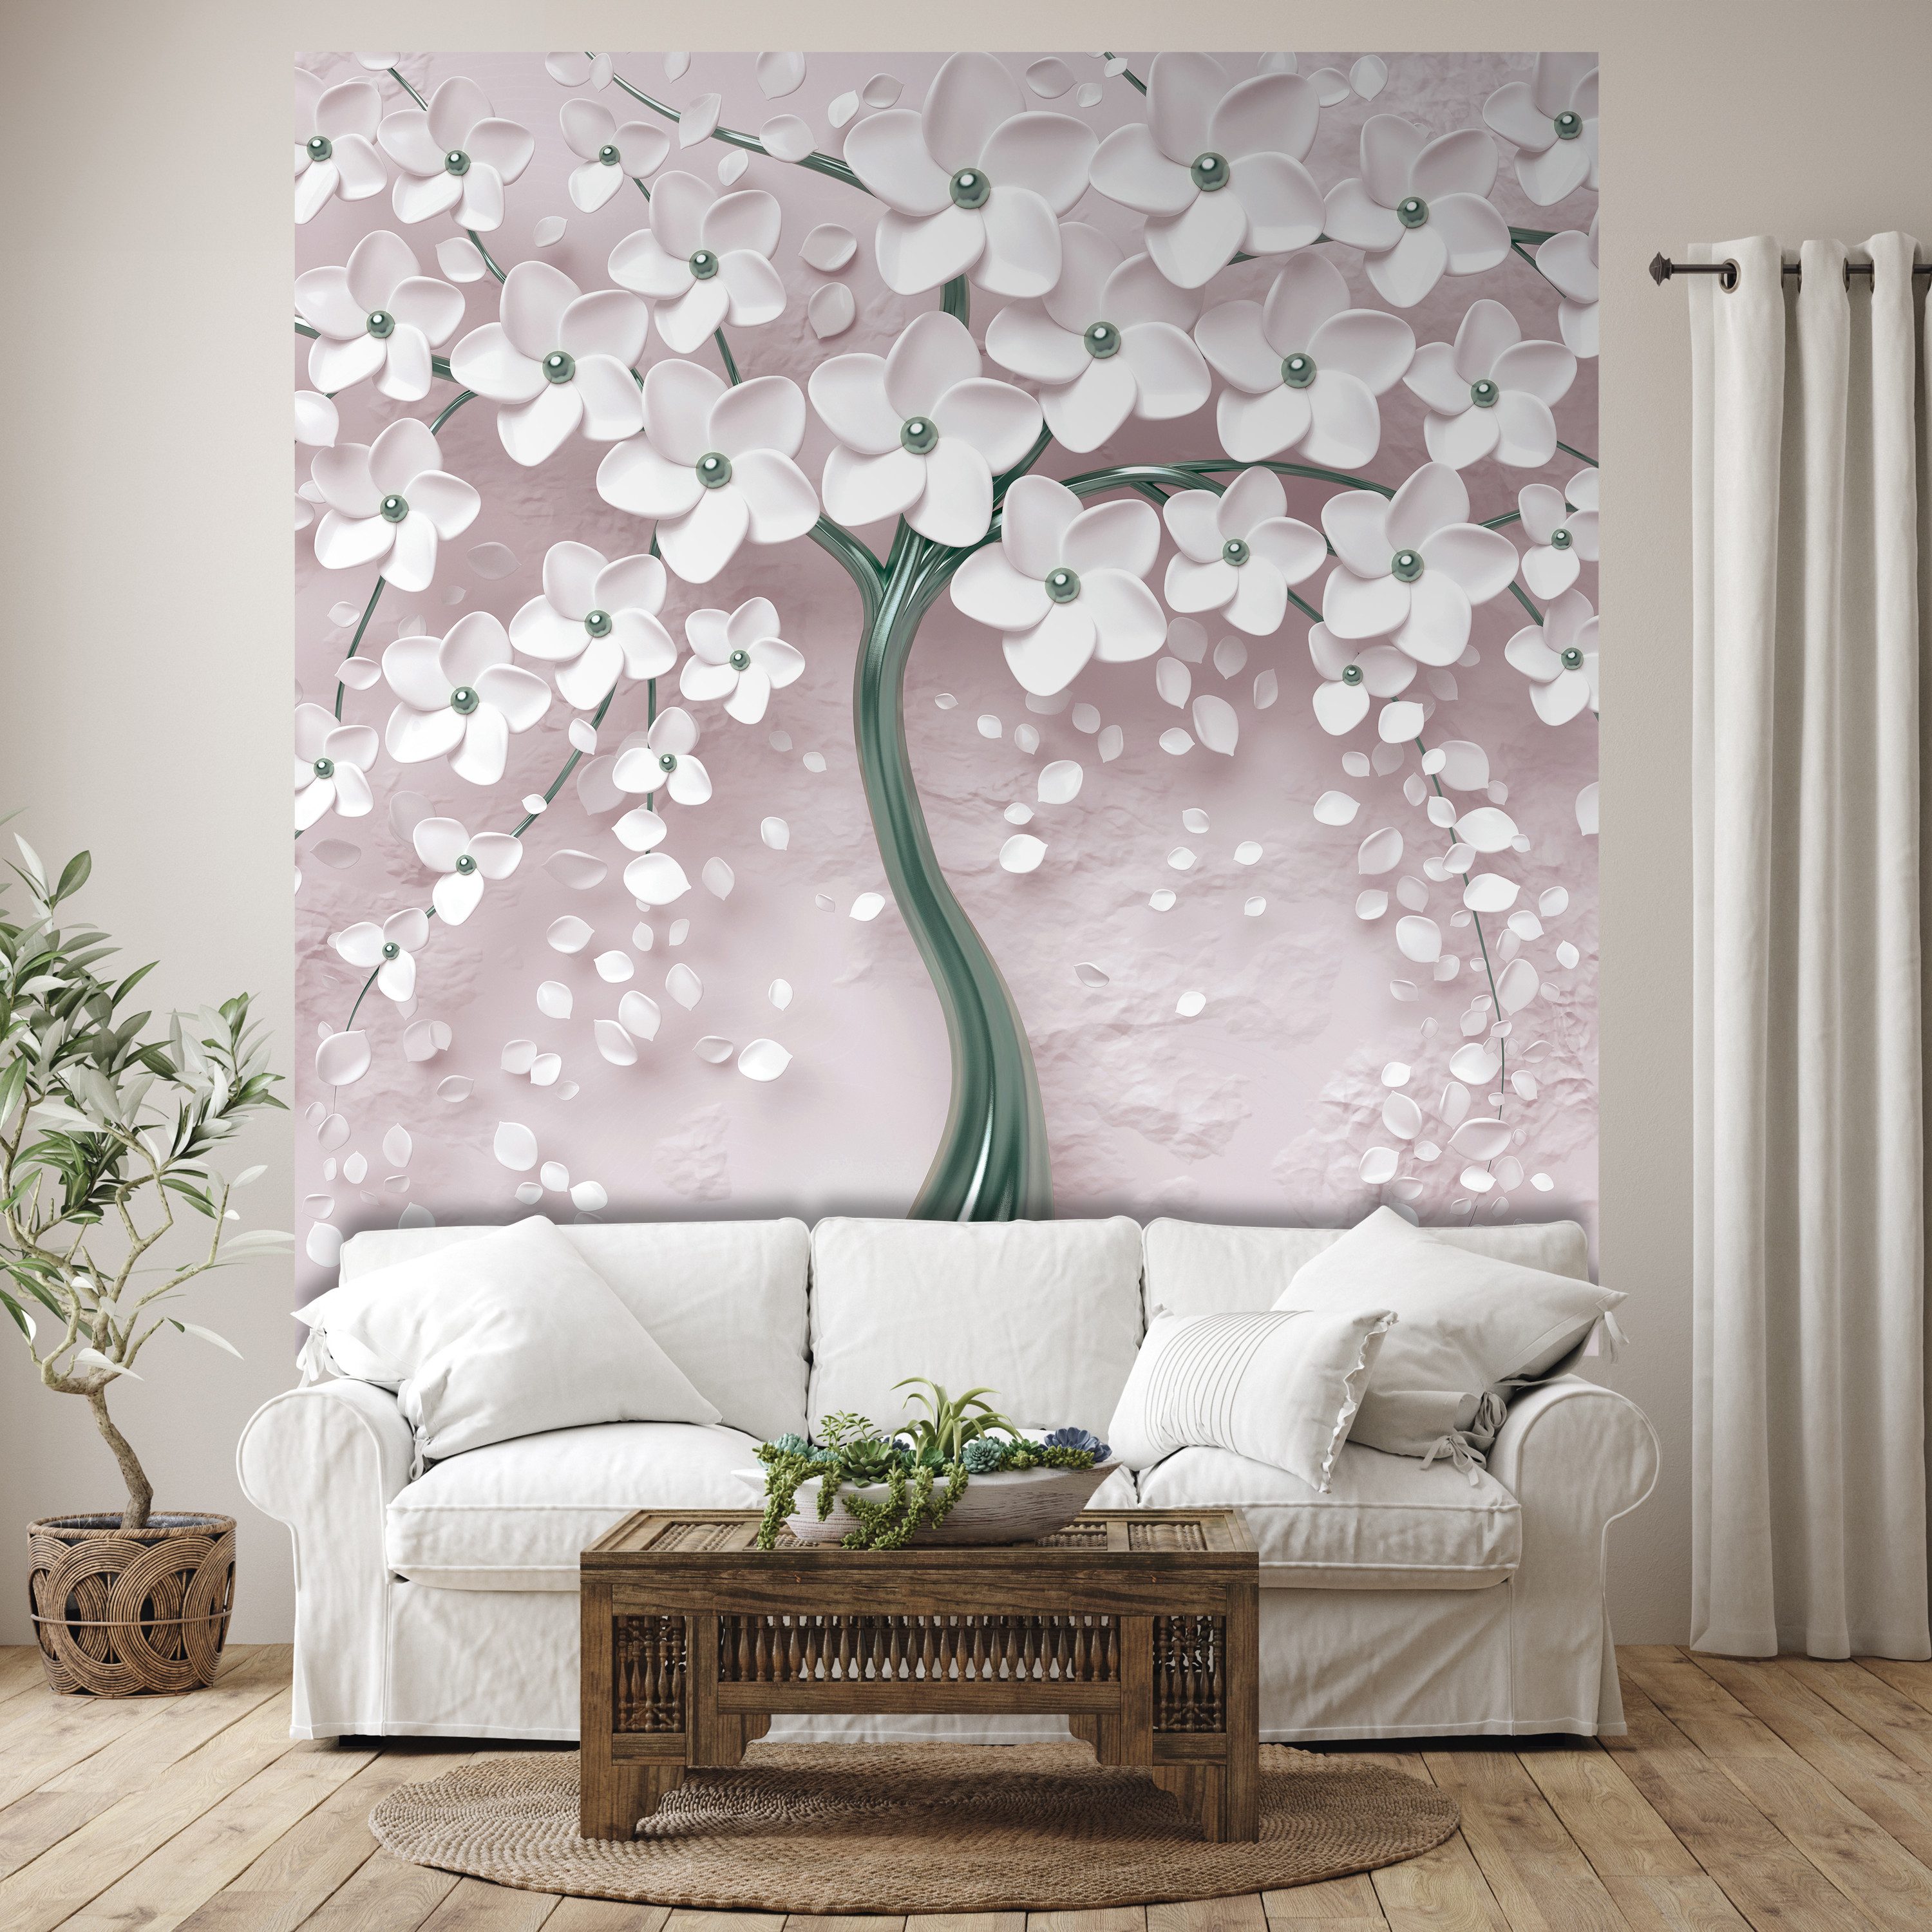 wandmotiv24 Fototapete Baum mit Blüten, strukturiert, Wandtapete, Motivtapete, matt, Vinyltapete, selbstklebend